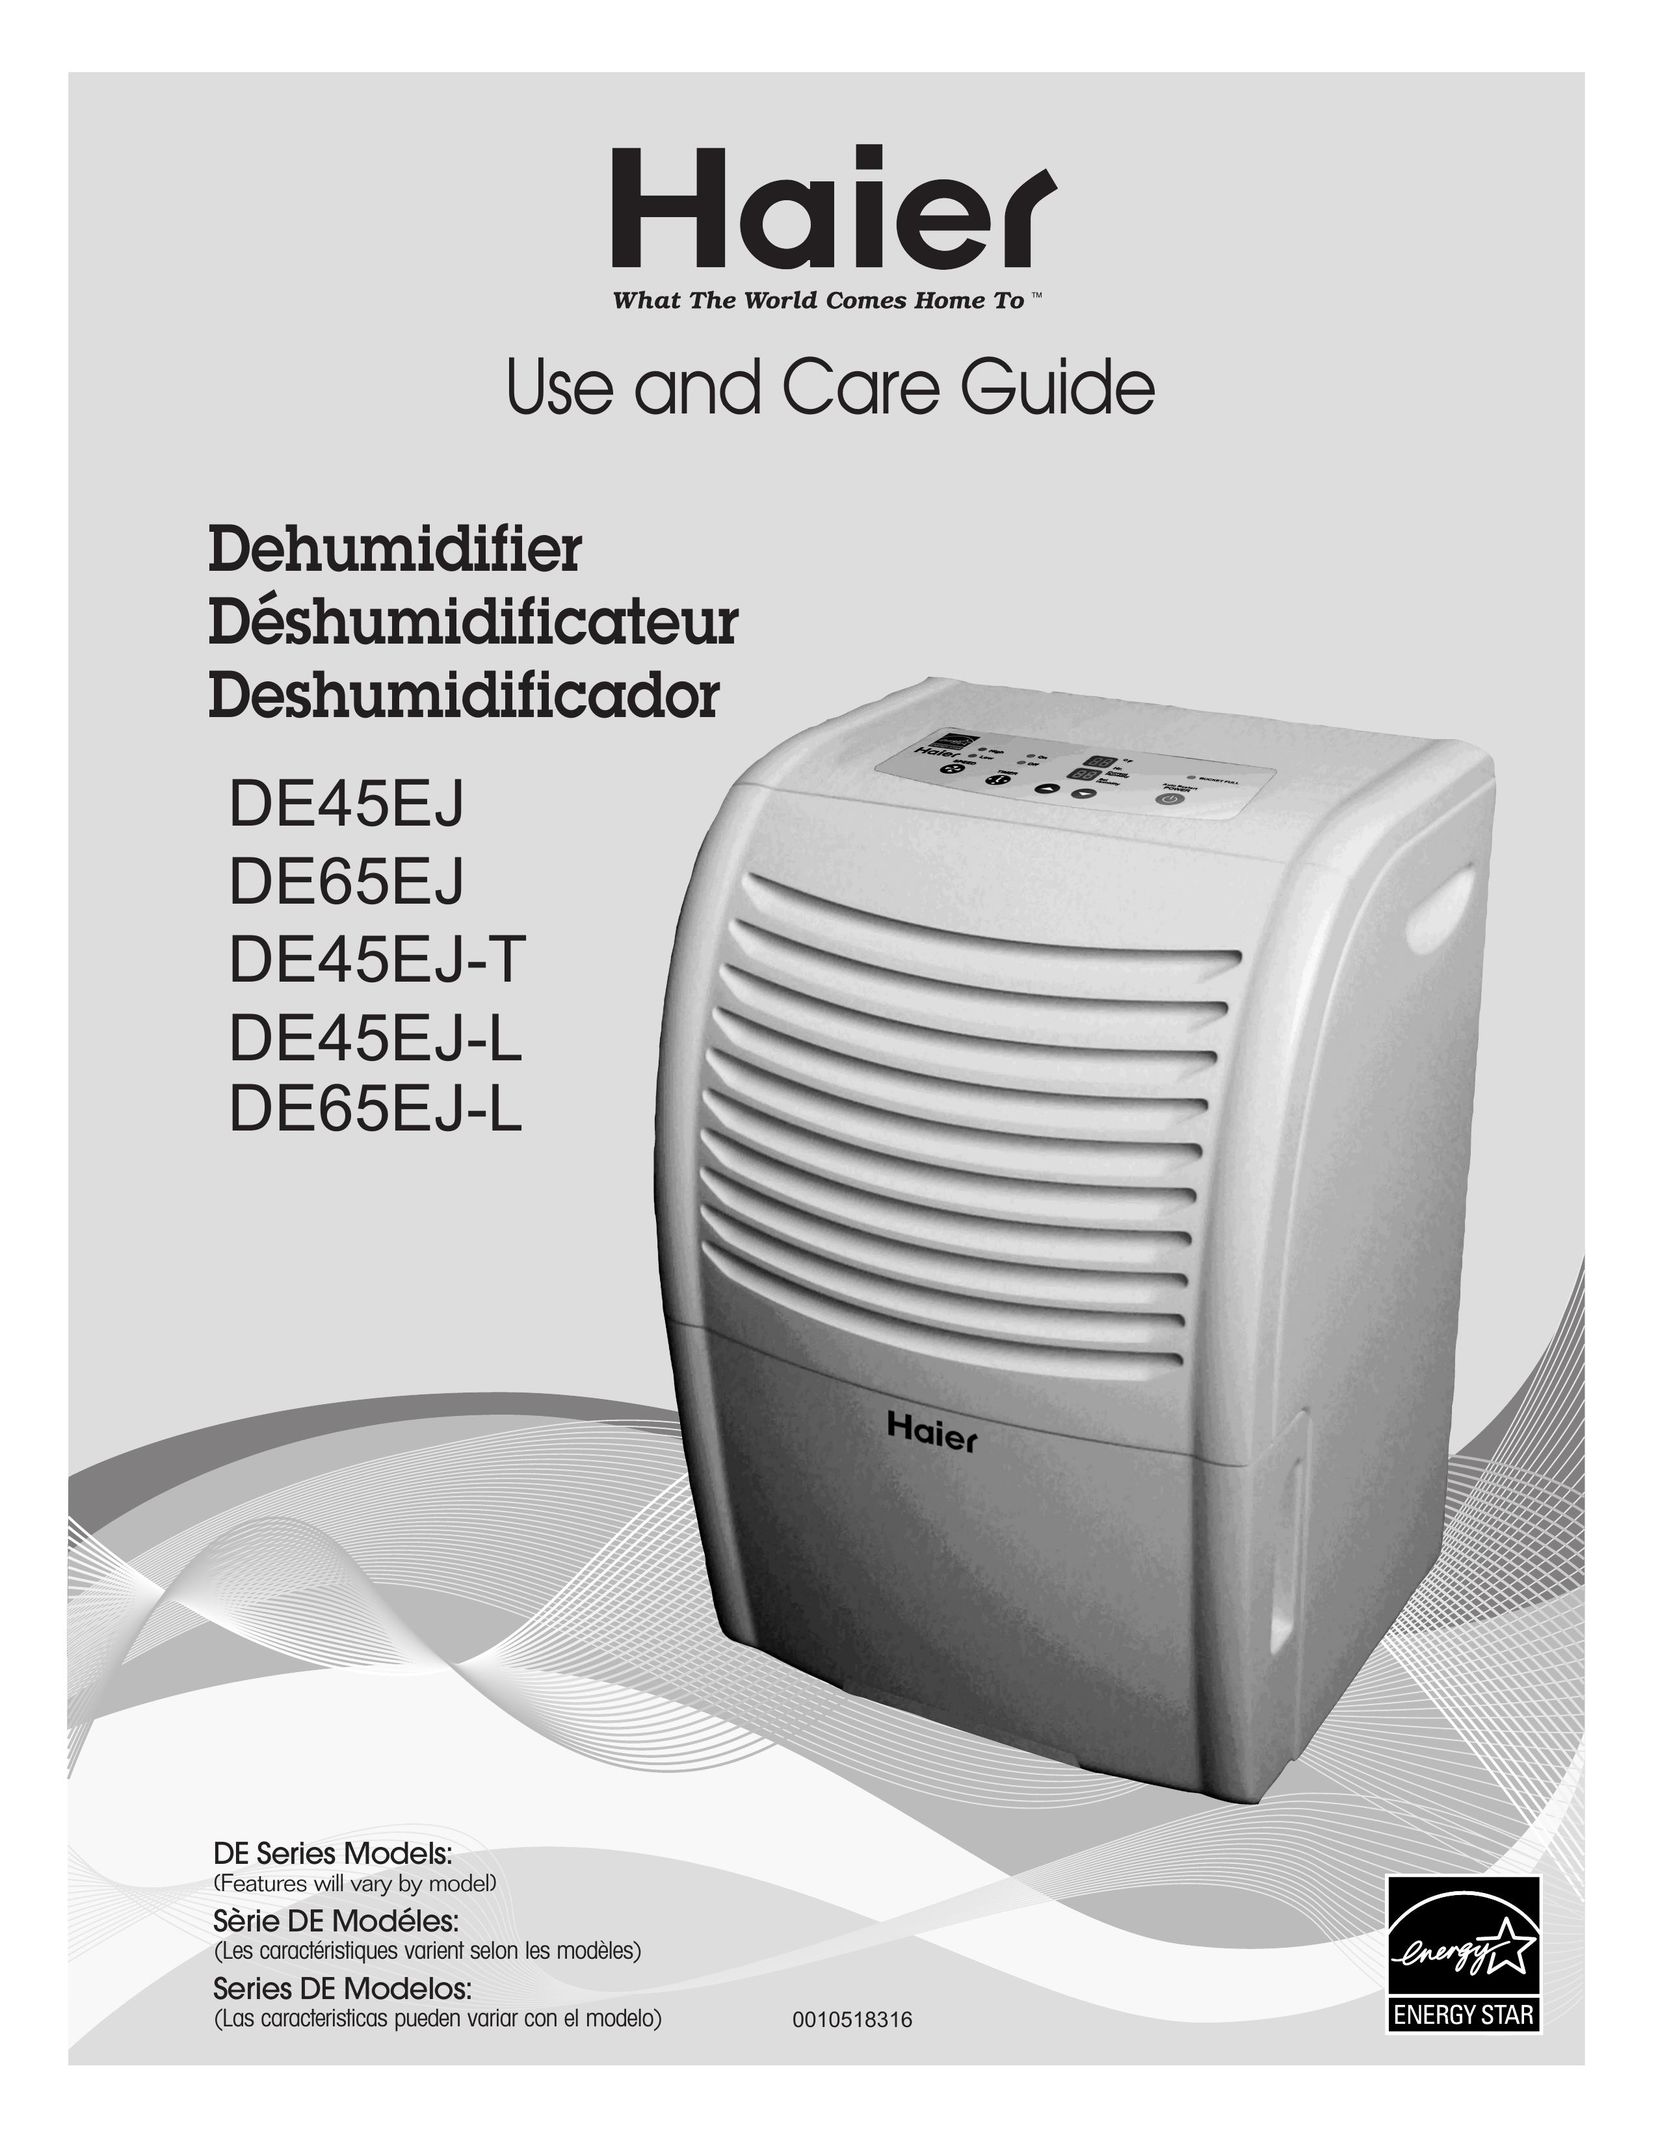 Haier DE45EJ-T Dehumidifier User Manual